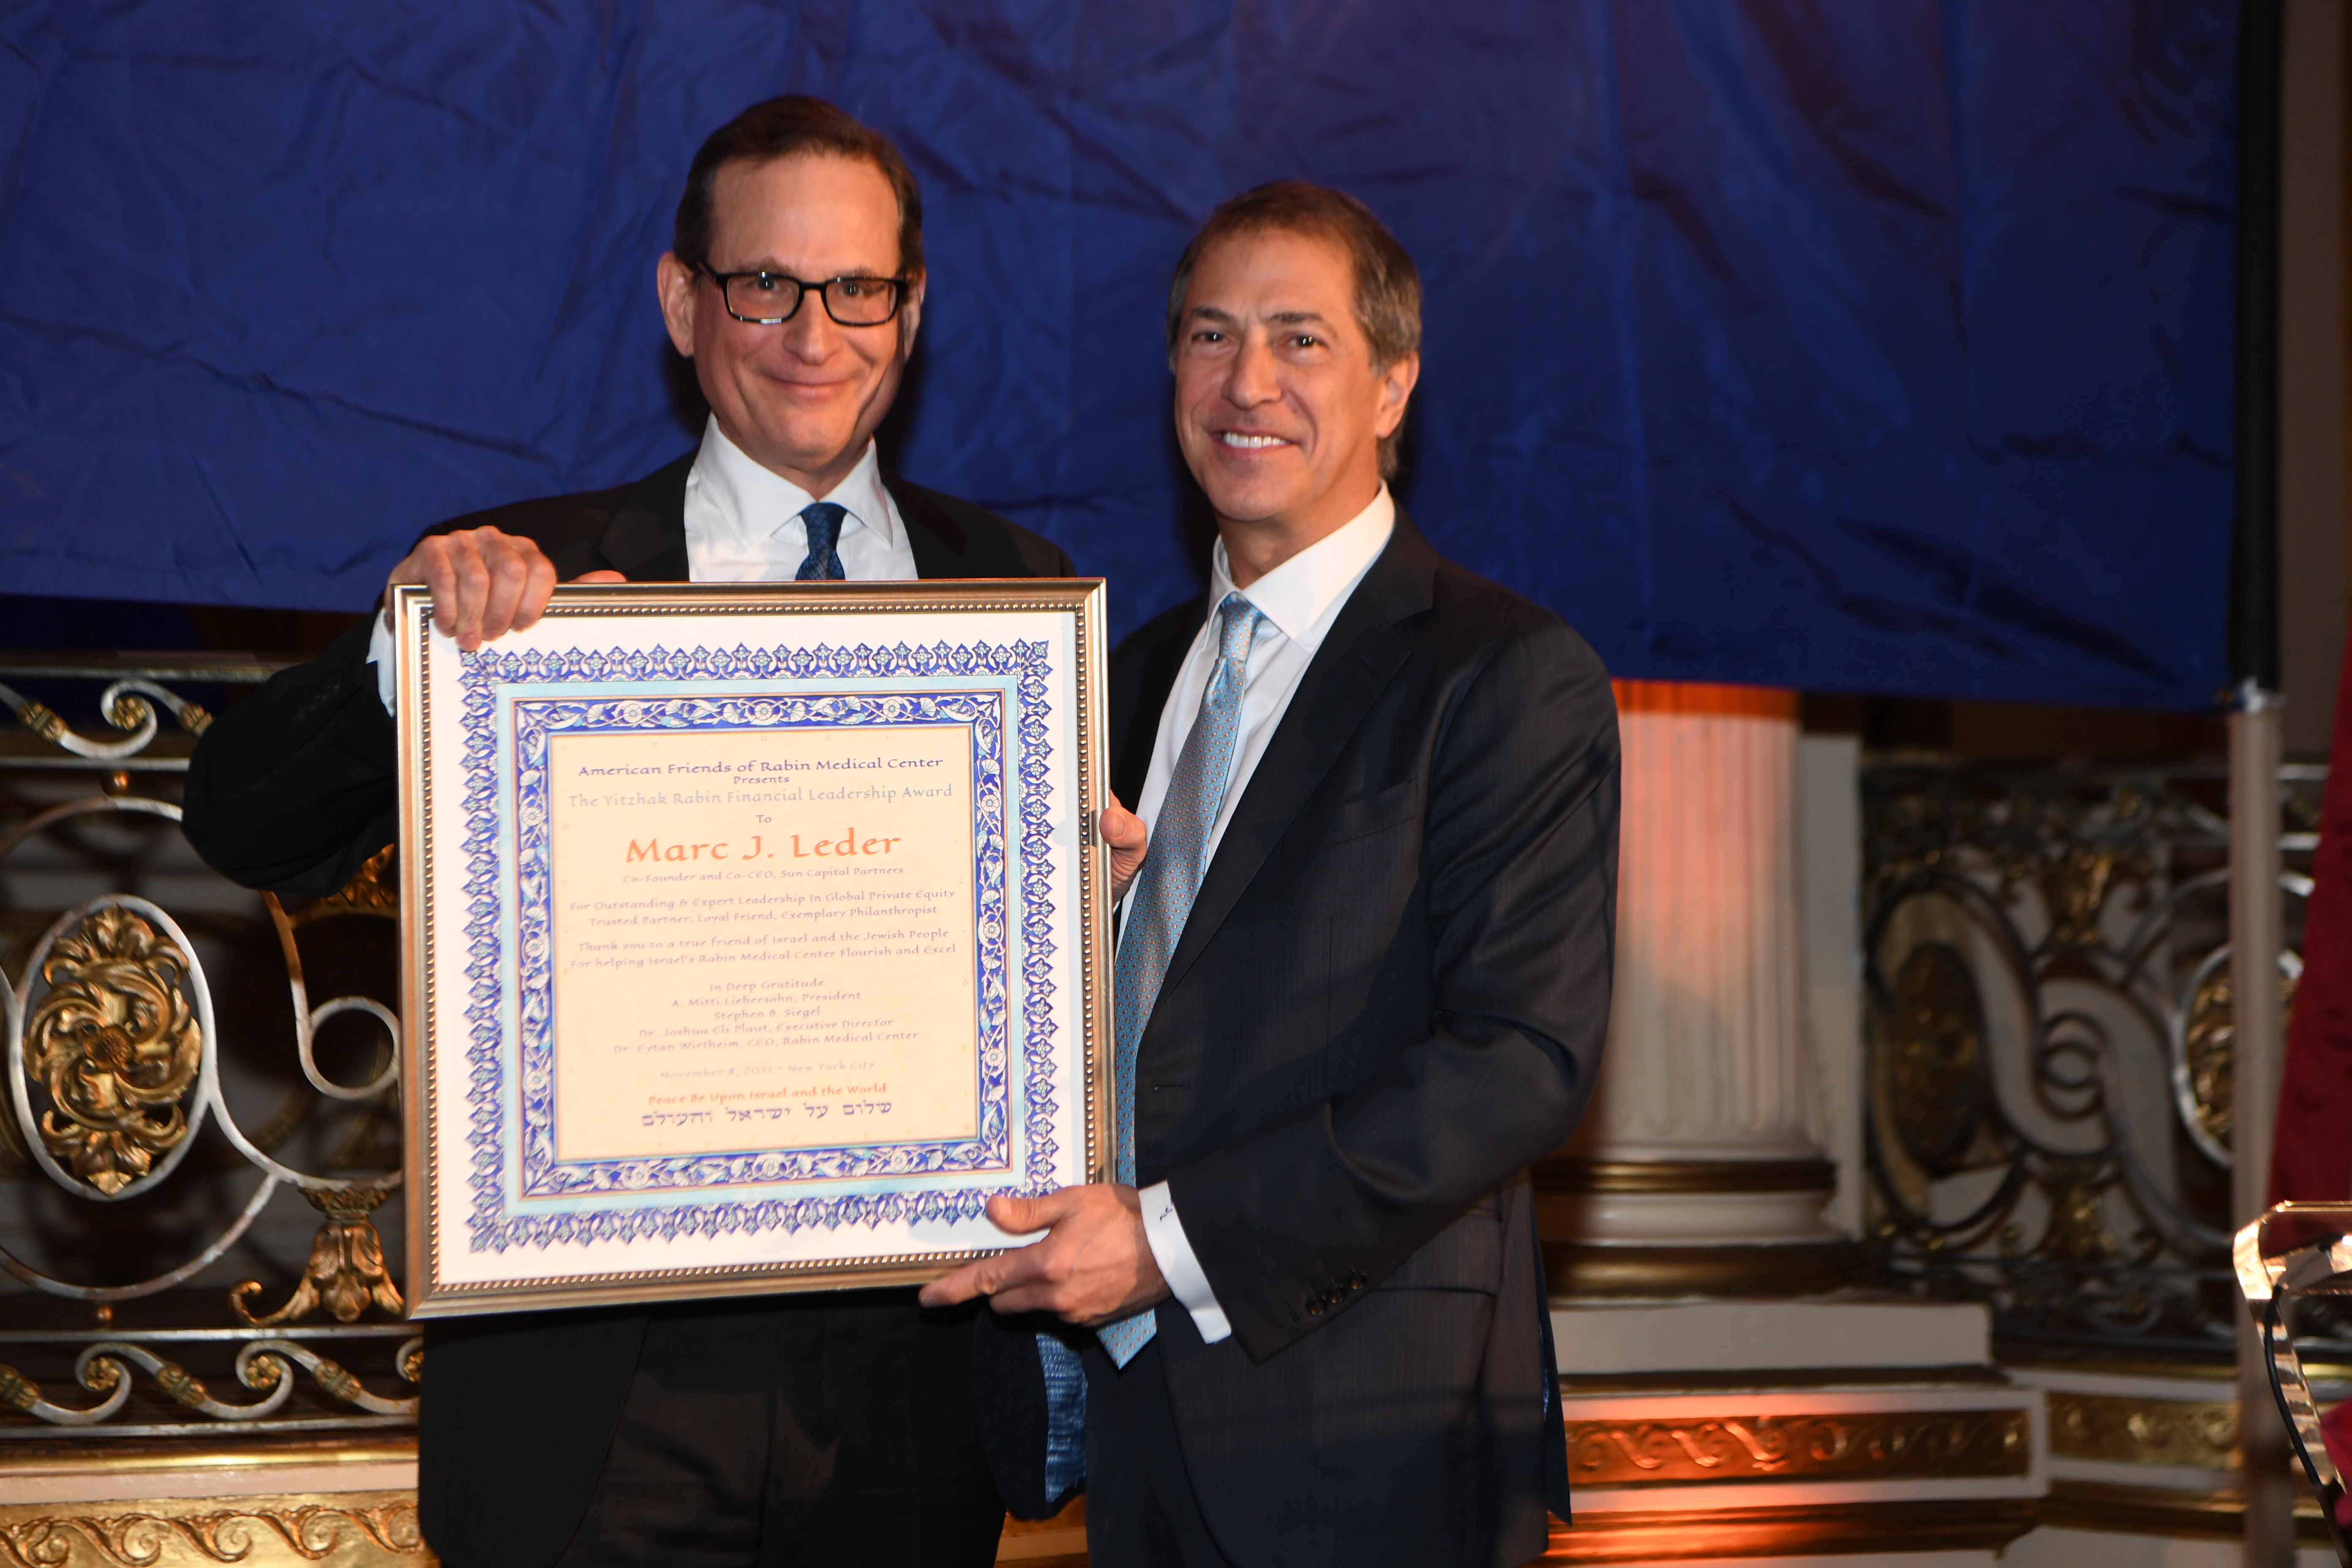 Sun Capital Partners Co-CEO Marc Leder Receives Prestigious Yitzhak Rabin Financial Leadership Award from American Friends of Rabin Medical Center | Business Wire